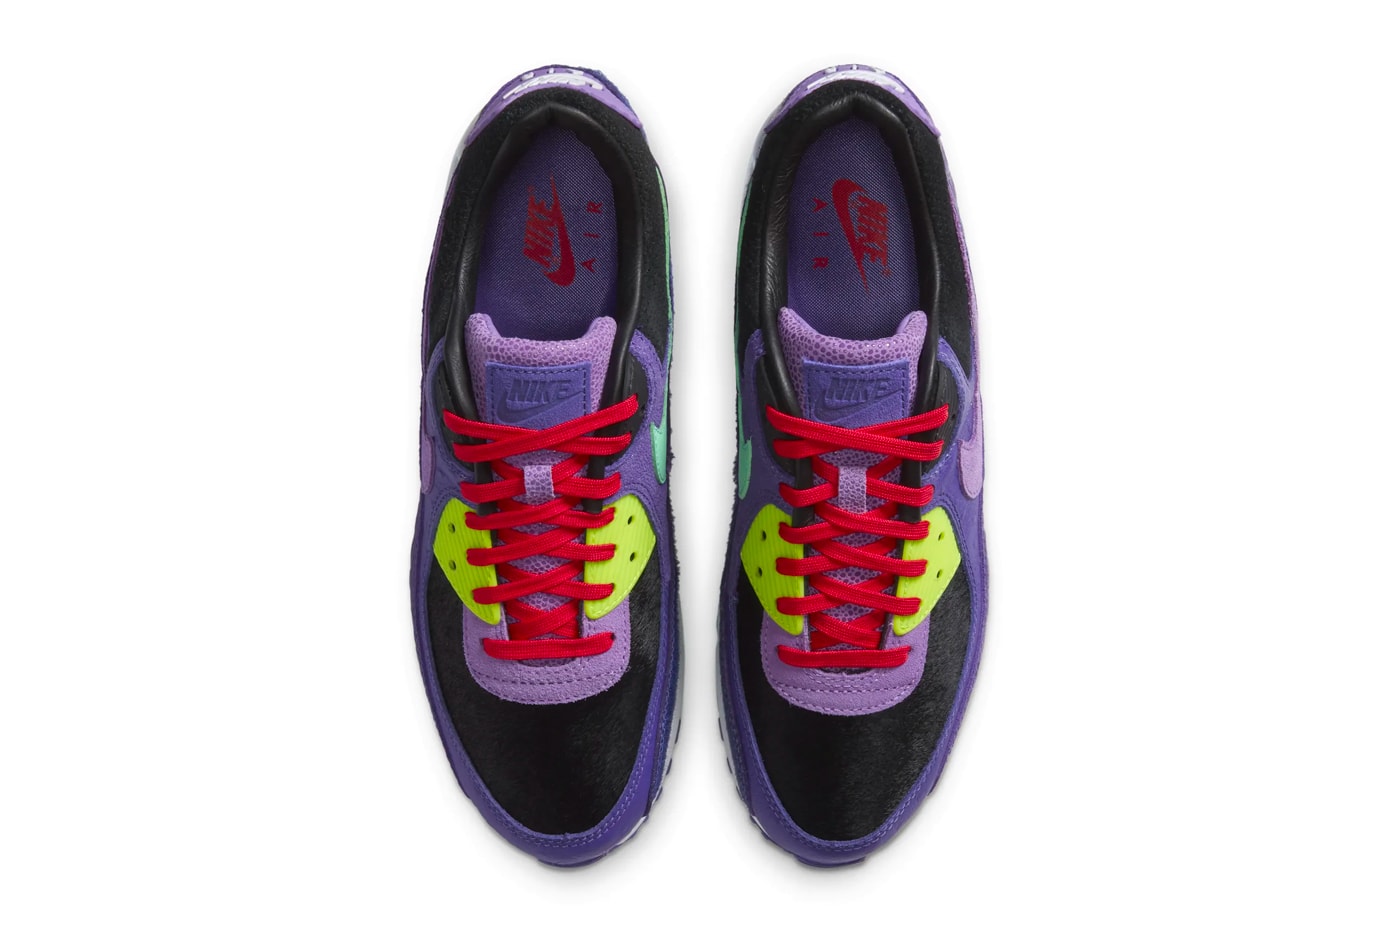 Nike Air Max 90 Violet Blend menswear streetwear spring summer 2020 collection ss20 footwear shoes sneakers kicks trainers runners